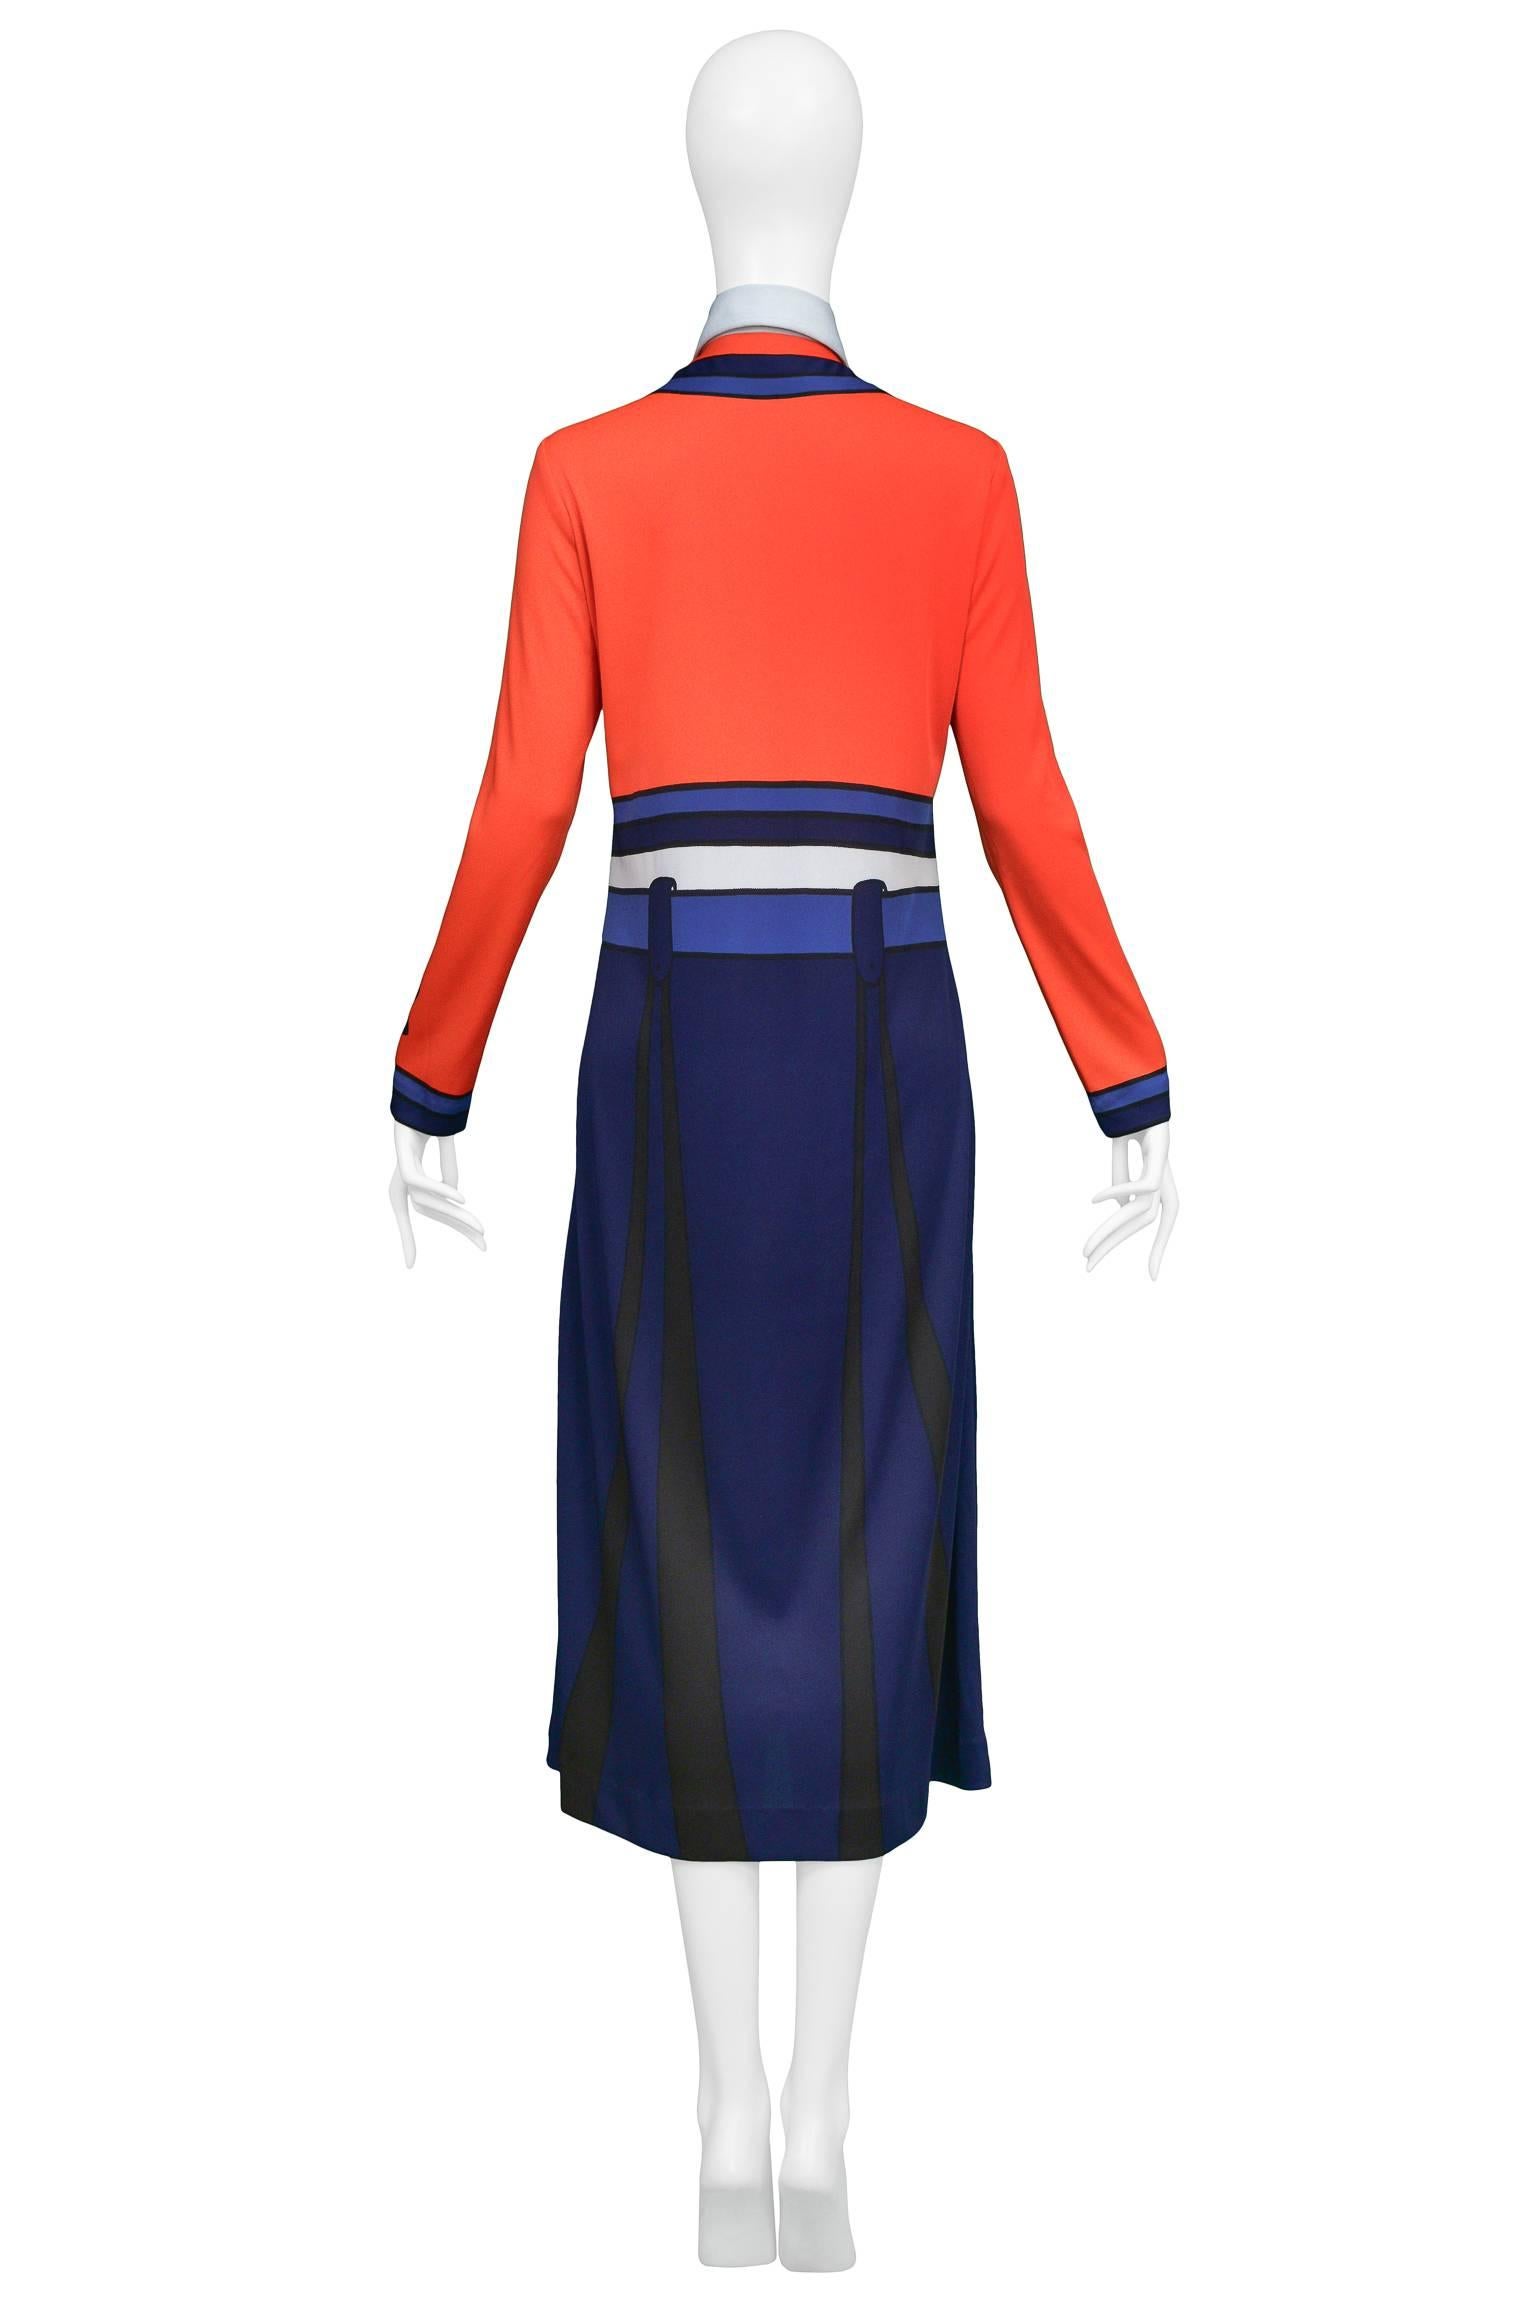 Roberta di Camerino Trompe Suit Red, Blue, Black, White Max Dress  In Excellent Condition For Sale In Los Angeles, CA